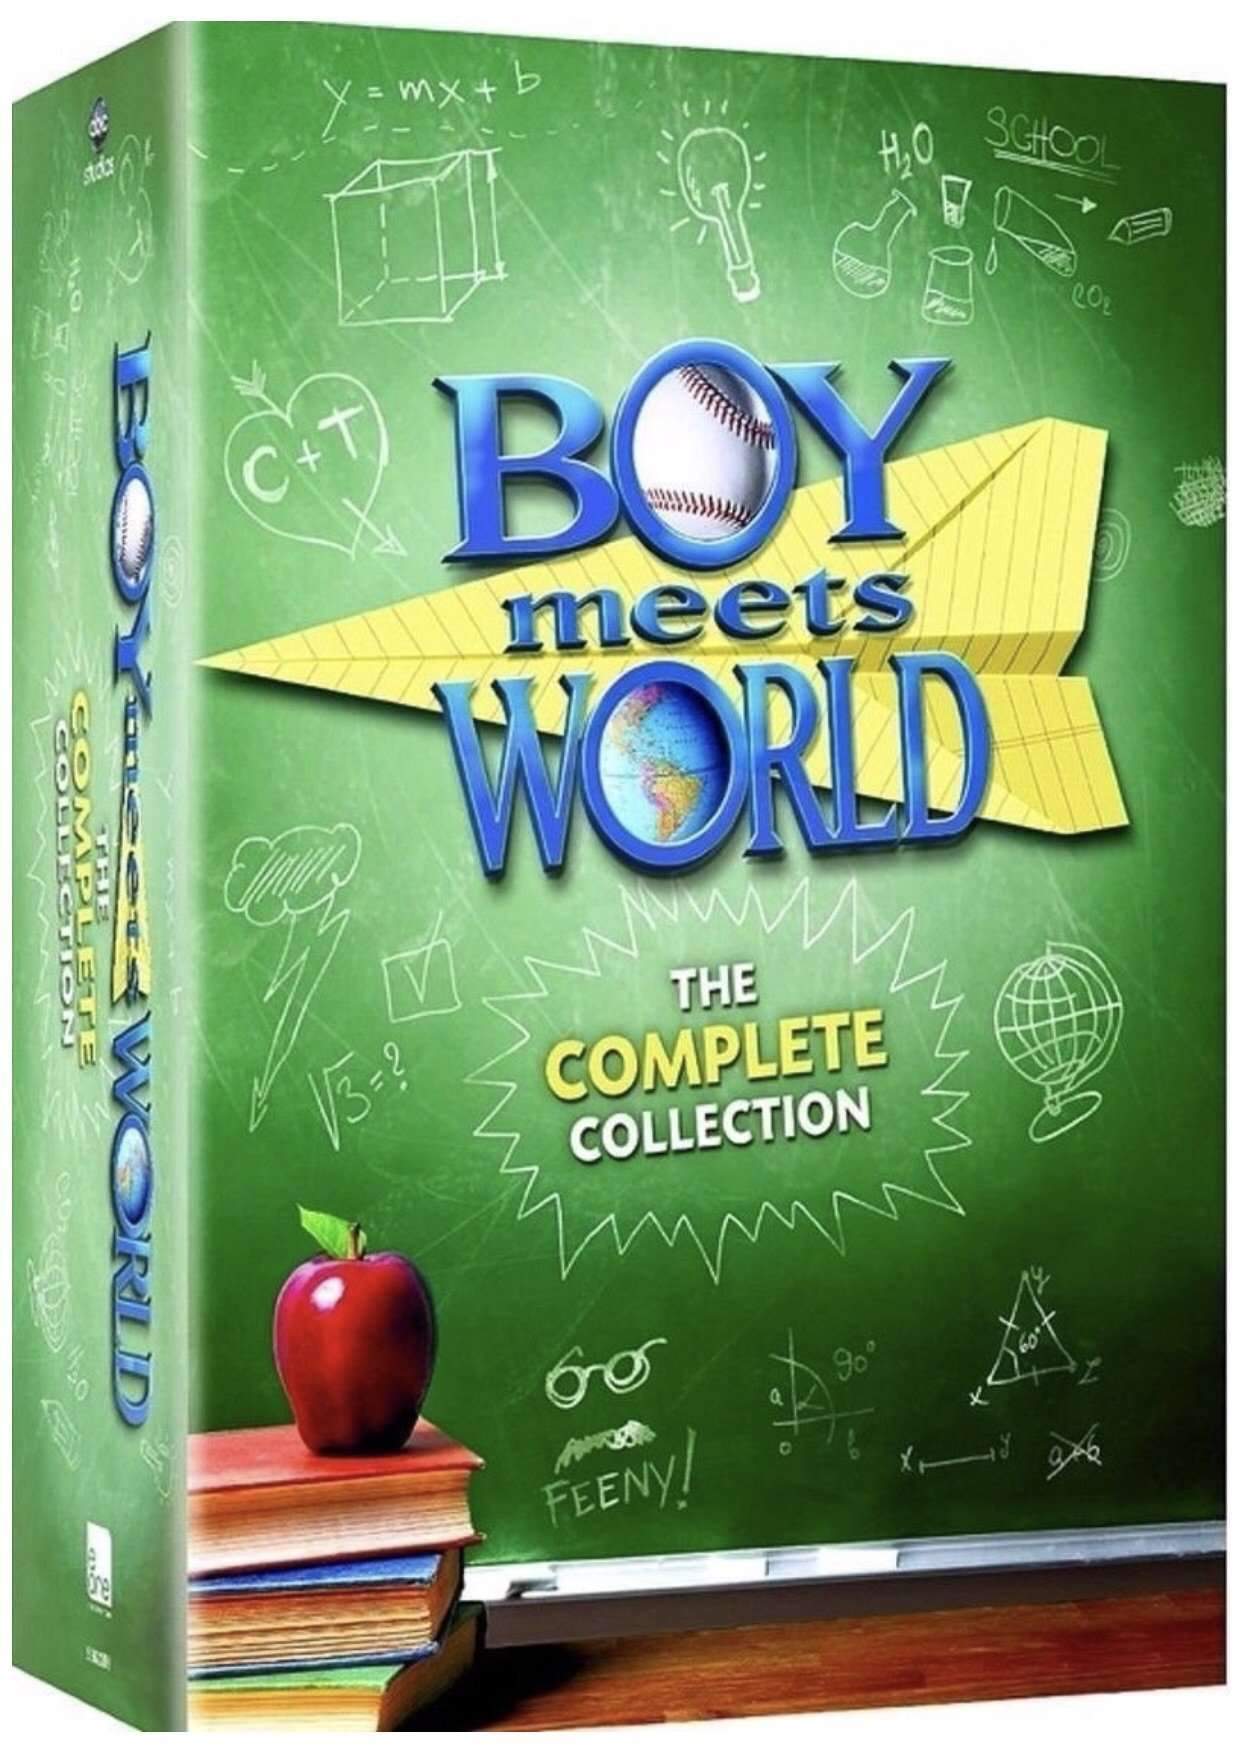 Boy Meets World DVD Complete Series Box Set Lionsgate DVDs & Blu-ray Discs